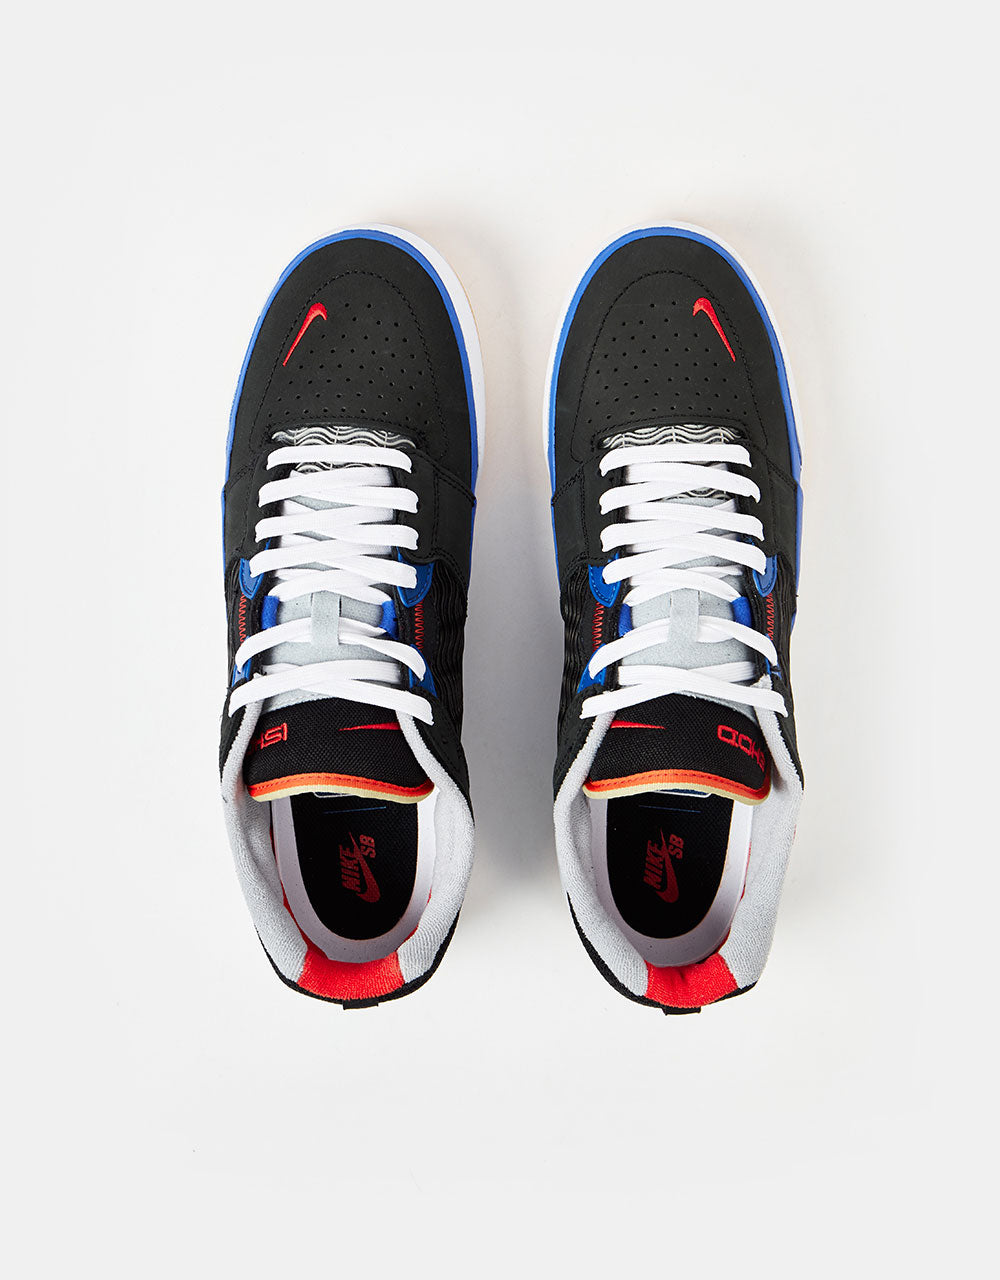 Nike SB Ishod Premium Skate Shoes - Black/University Red-Hyper Royal